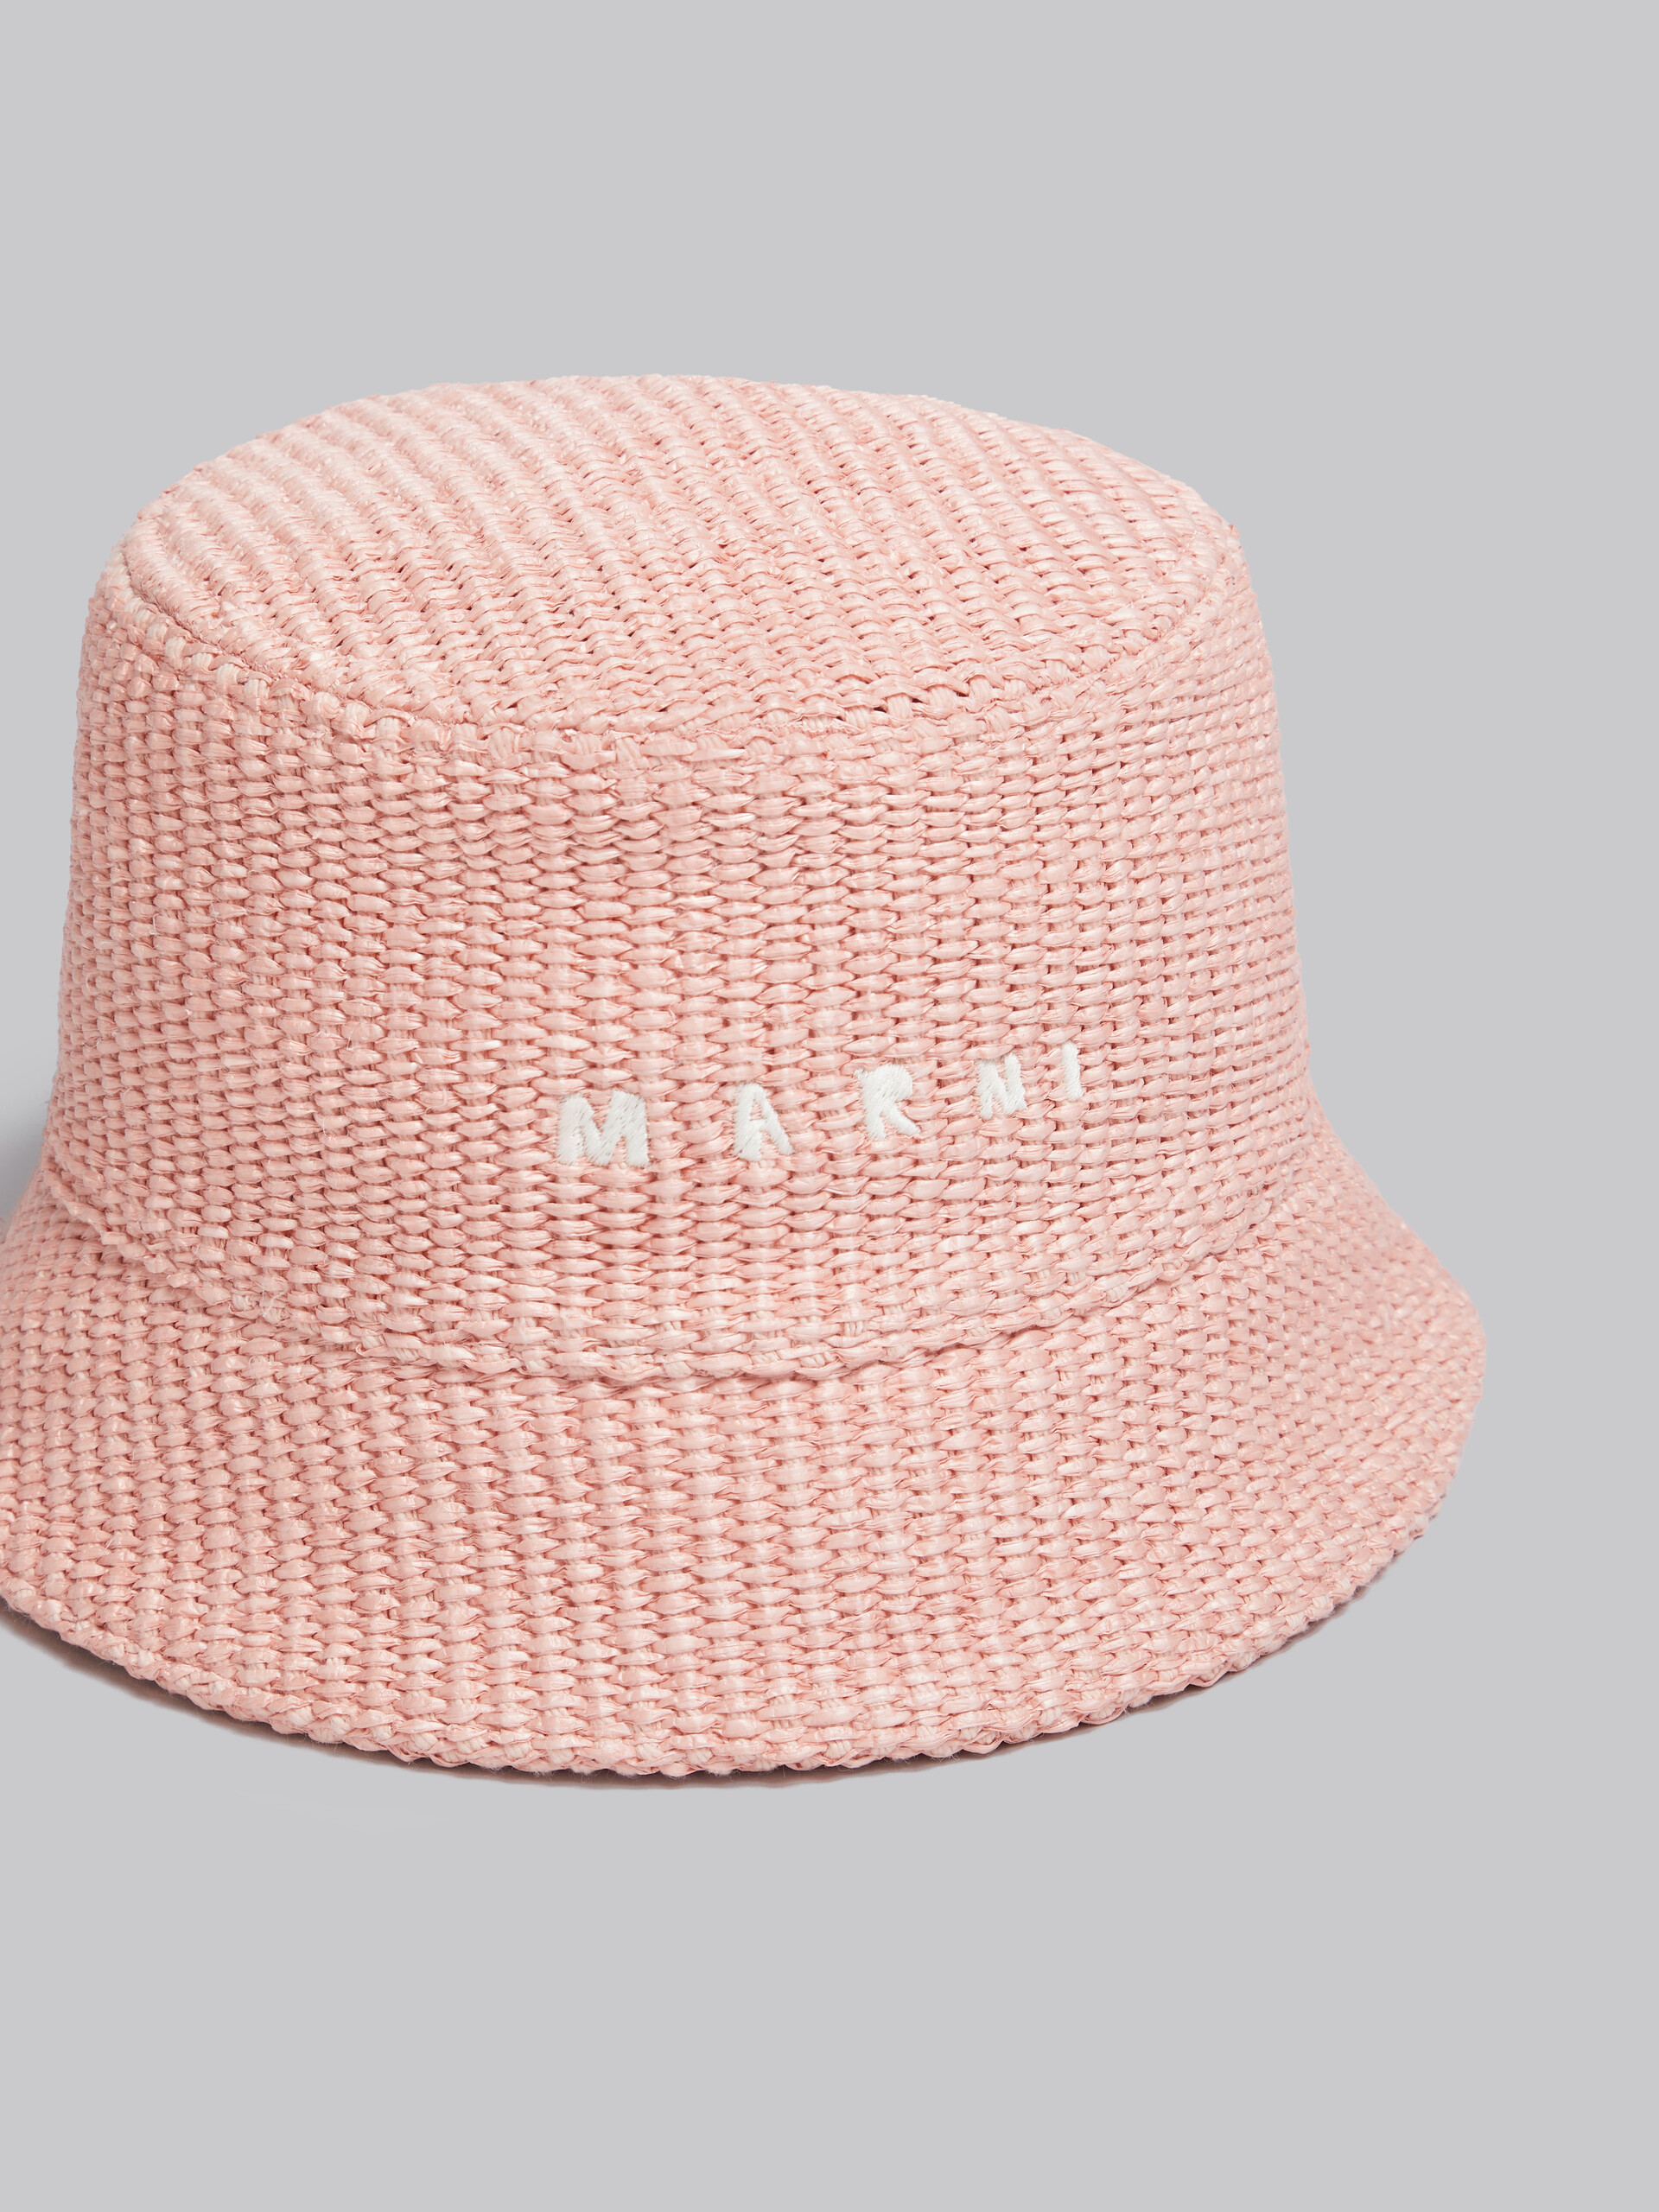 Gorro de pescador rosa de rafia con logotipo bordado - Sombrero - Image 4